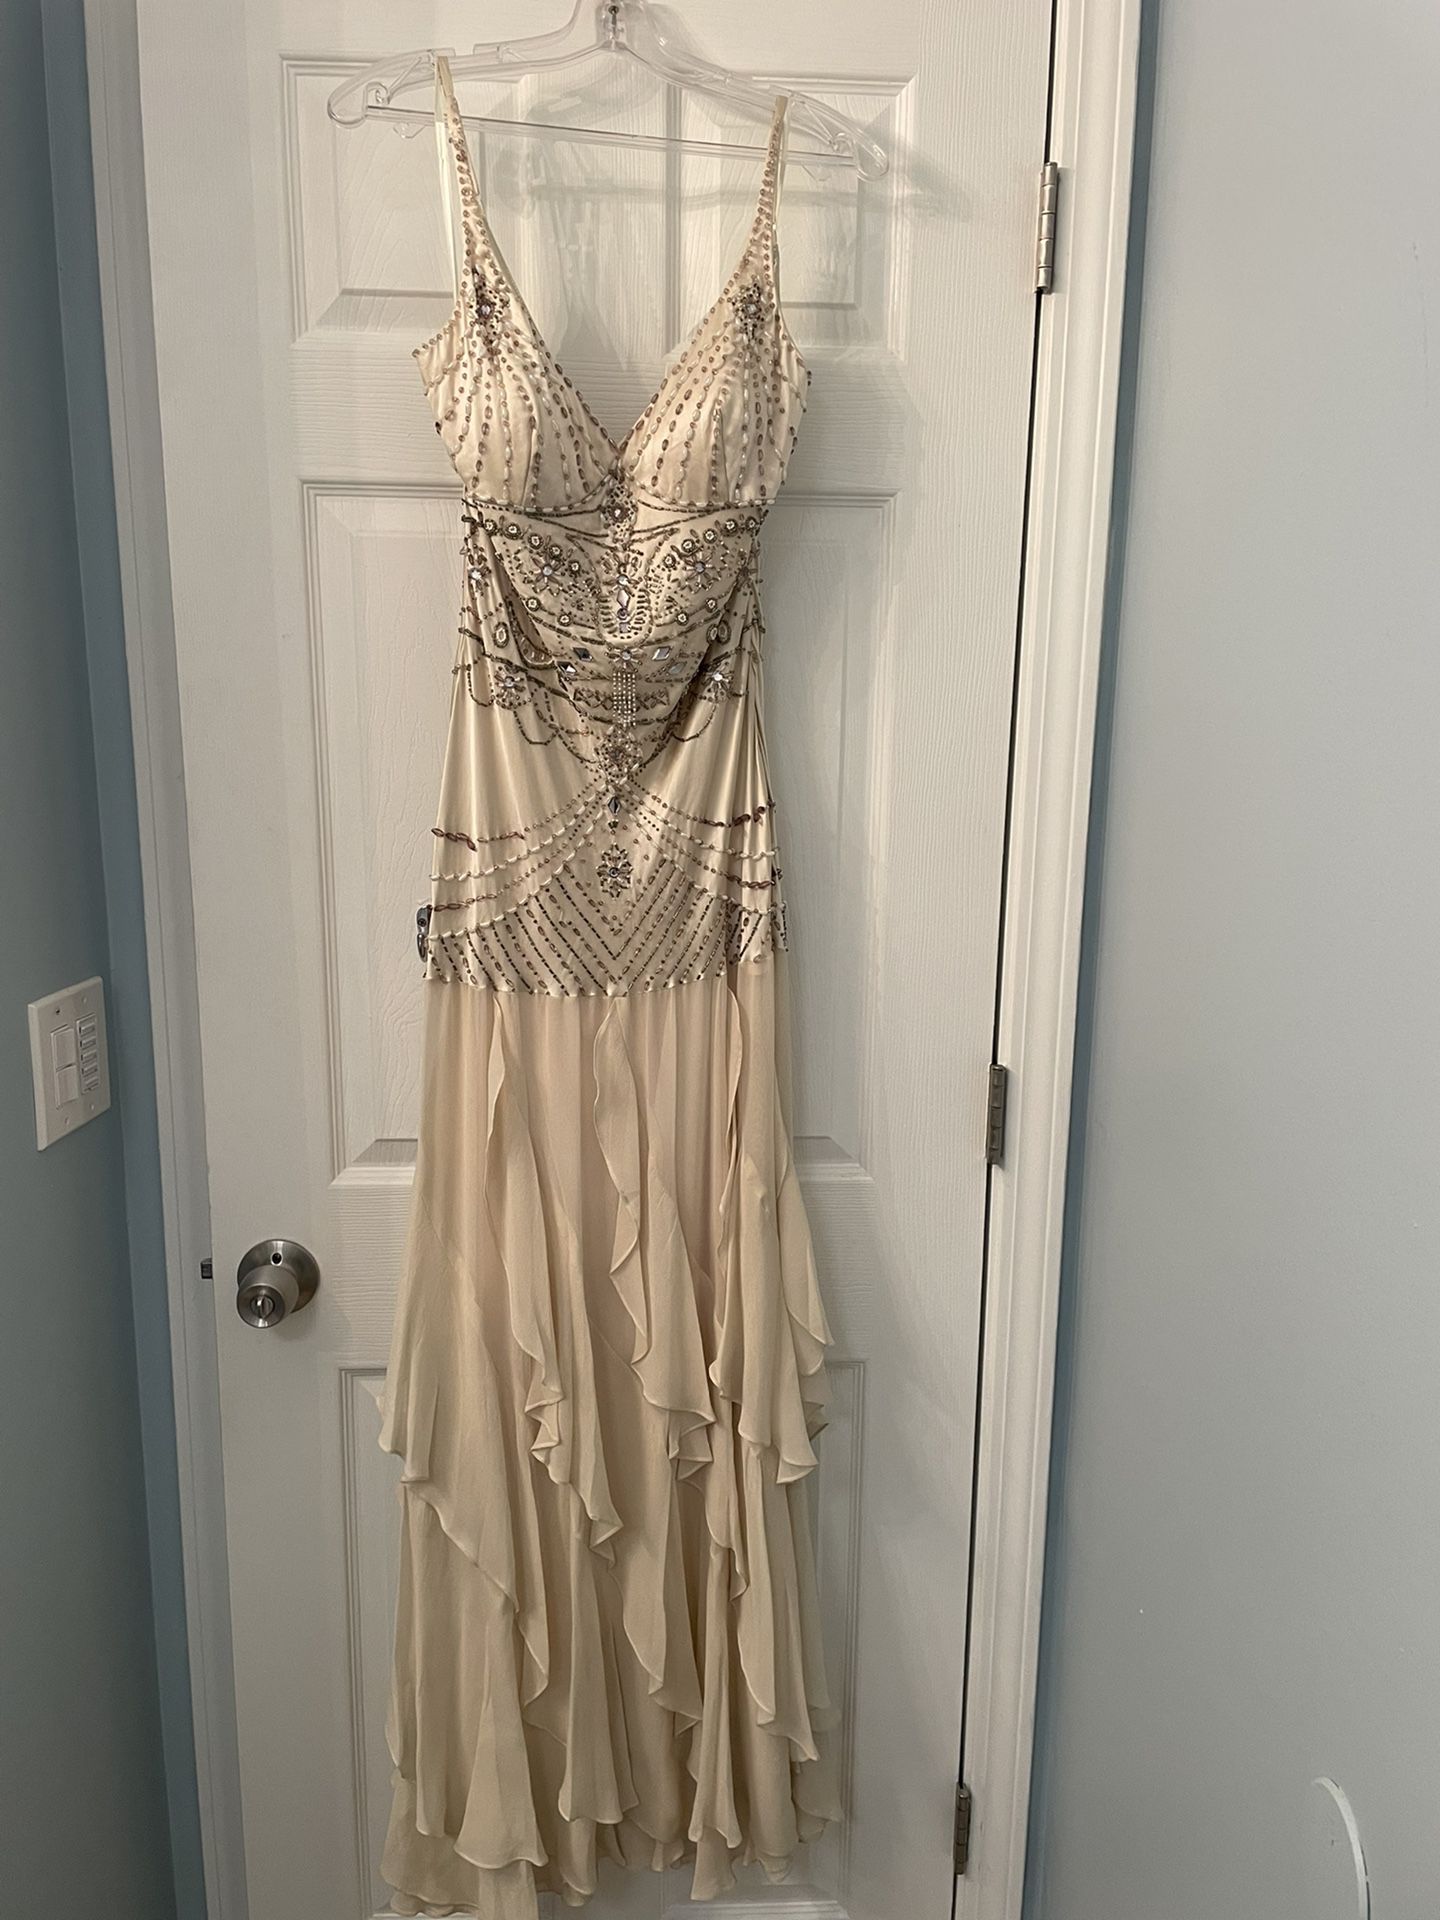  Wedding/formal Dress